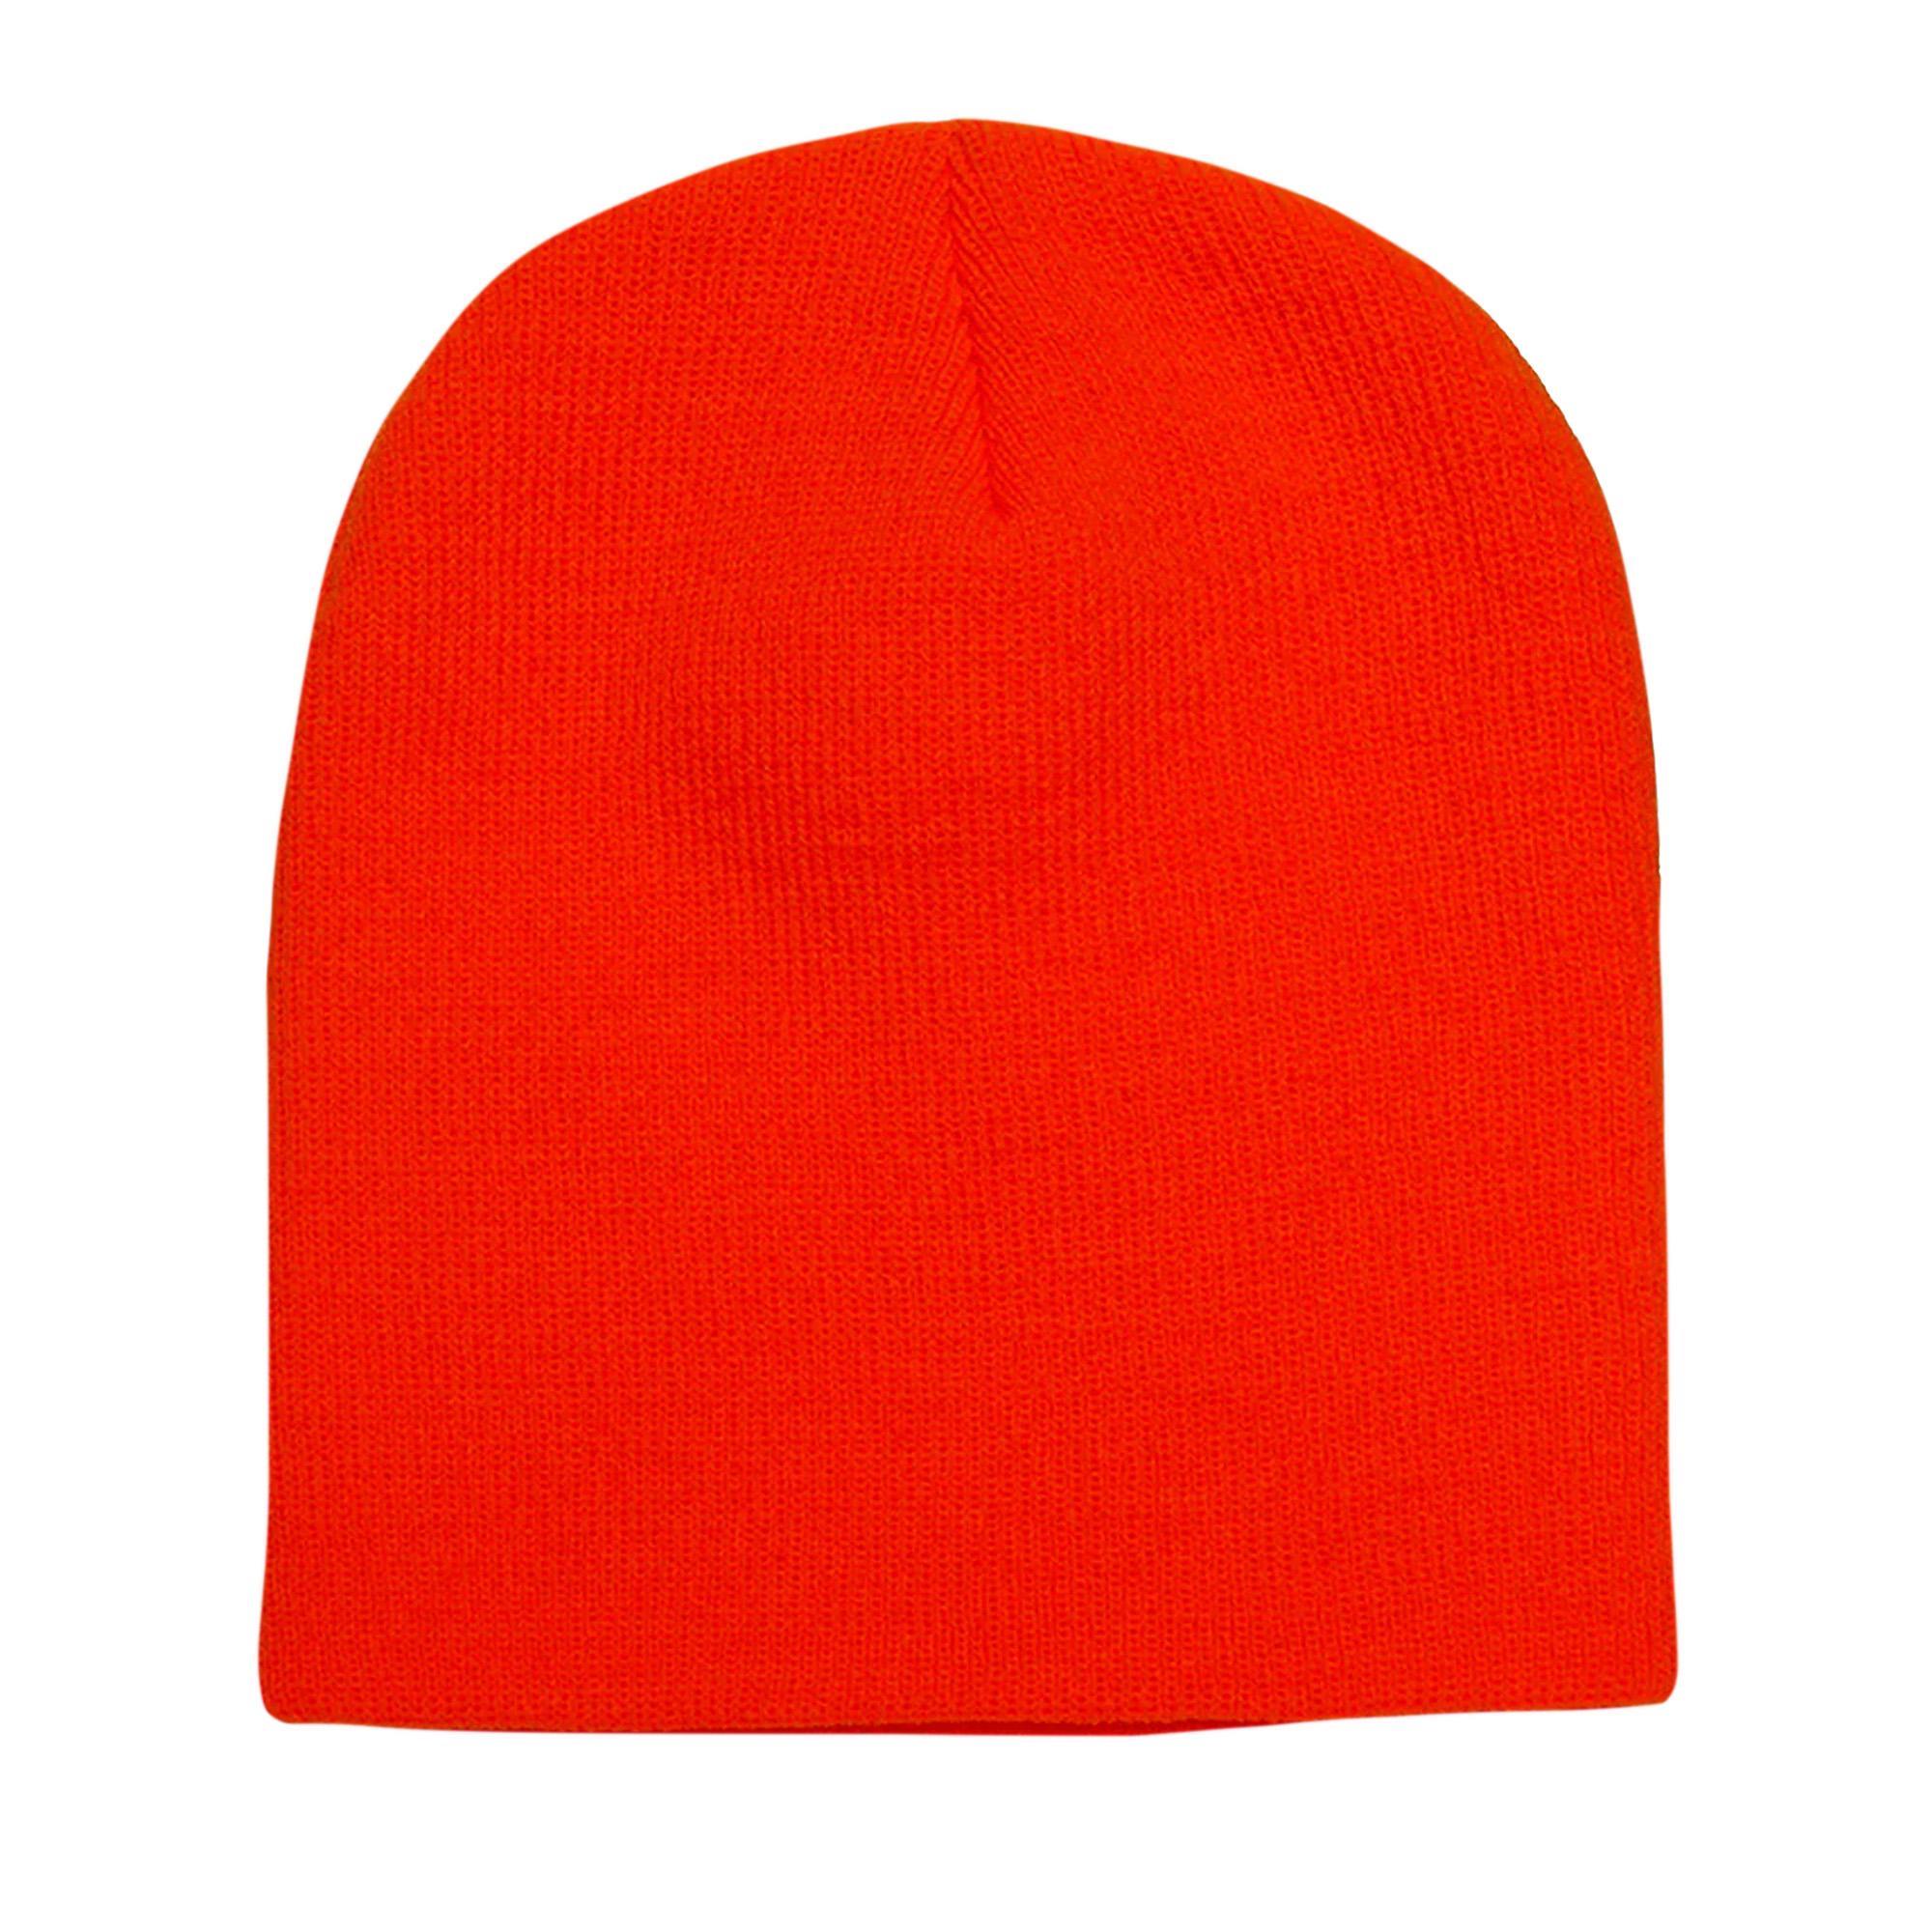 Yupoong Flexfit Unisex Heavyweight Standard Beanie Winter Hat (Blaze Orange) (One Size)